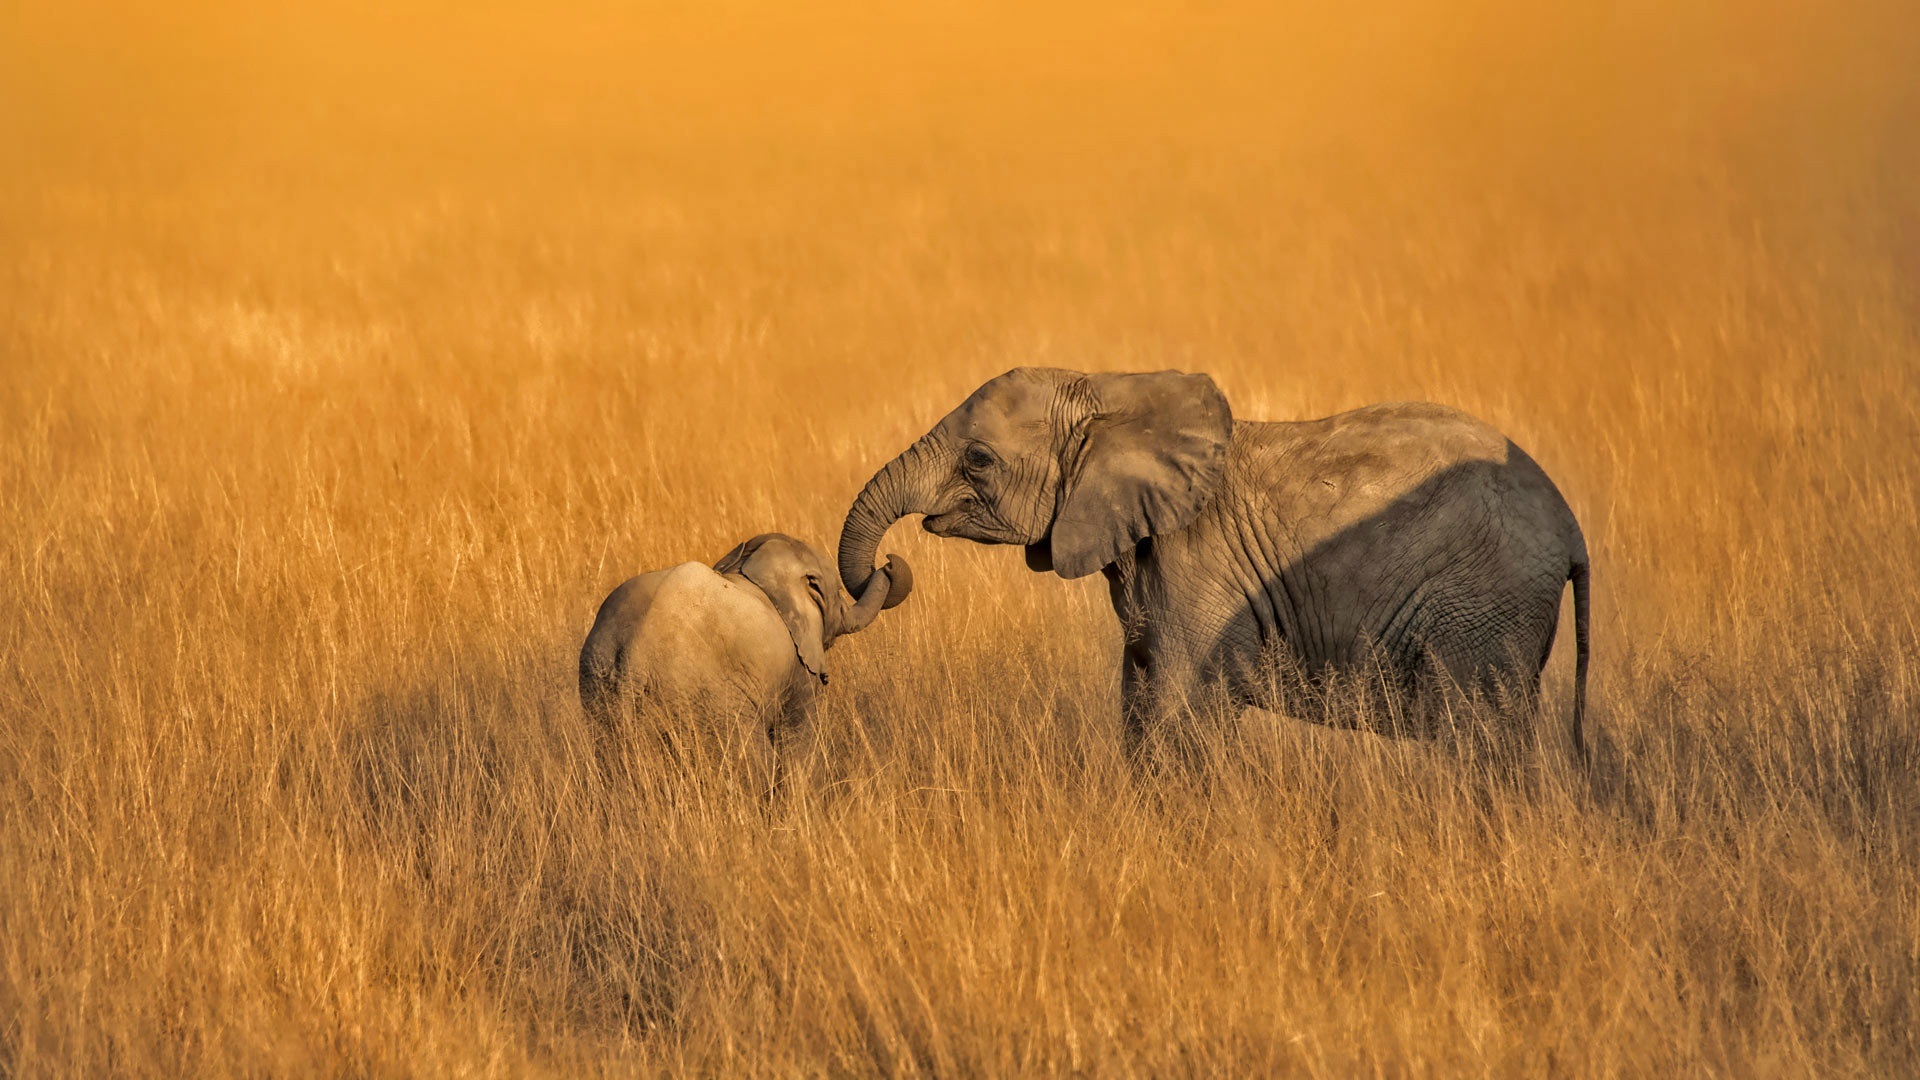 Amboseli-Kenya-National-Park-elephants-family-grass_1920x1080.jpg